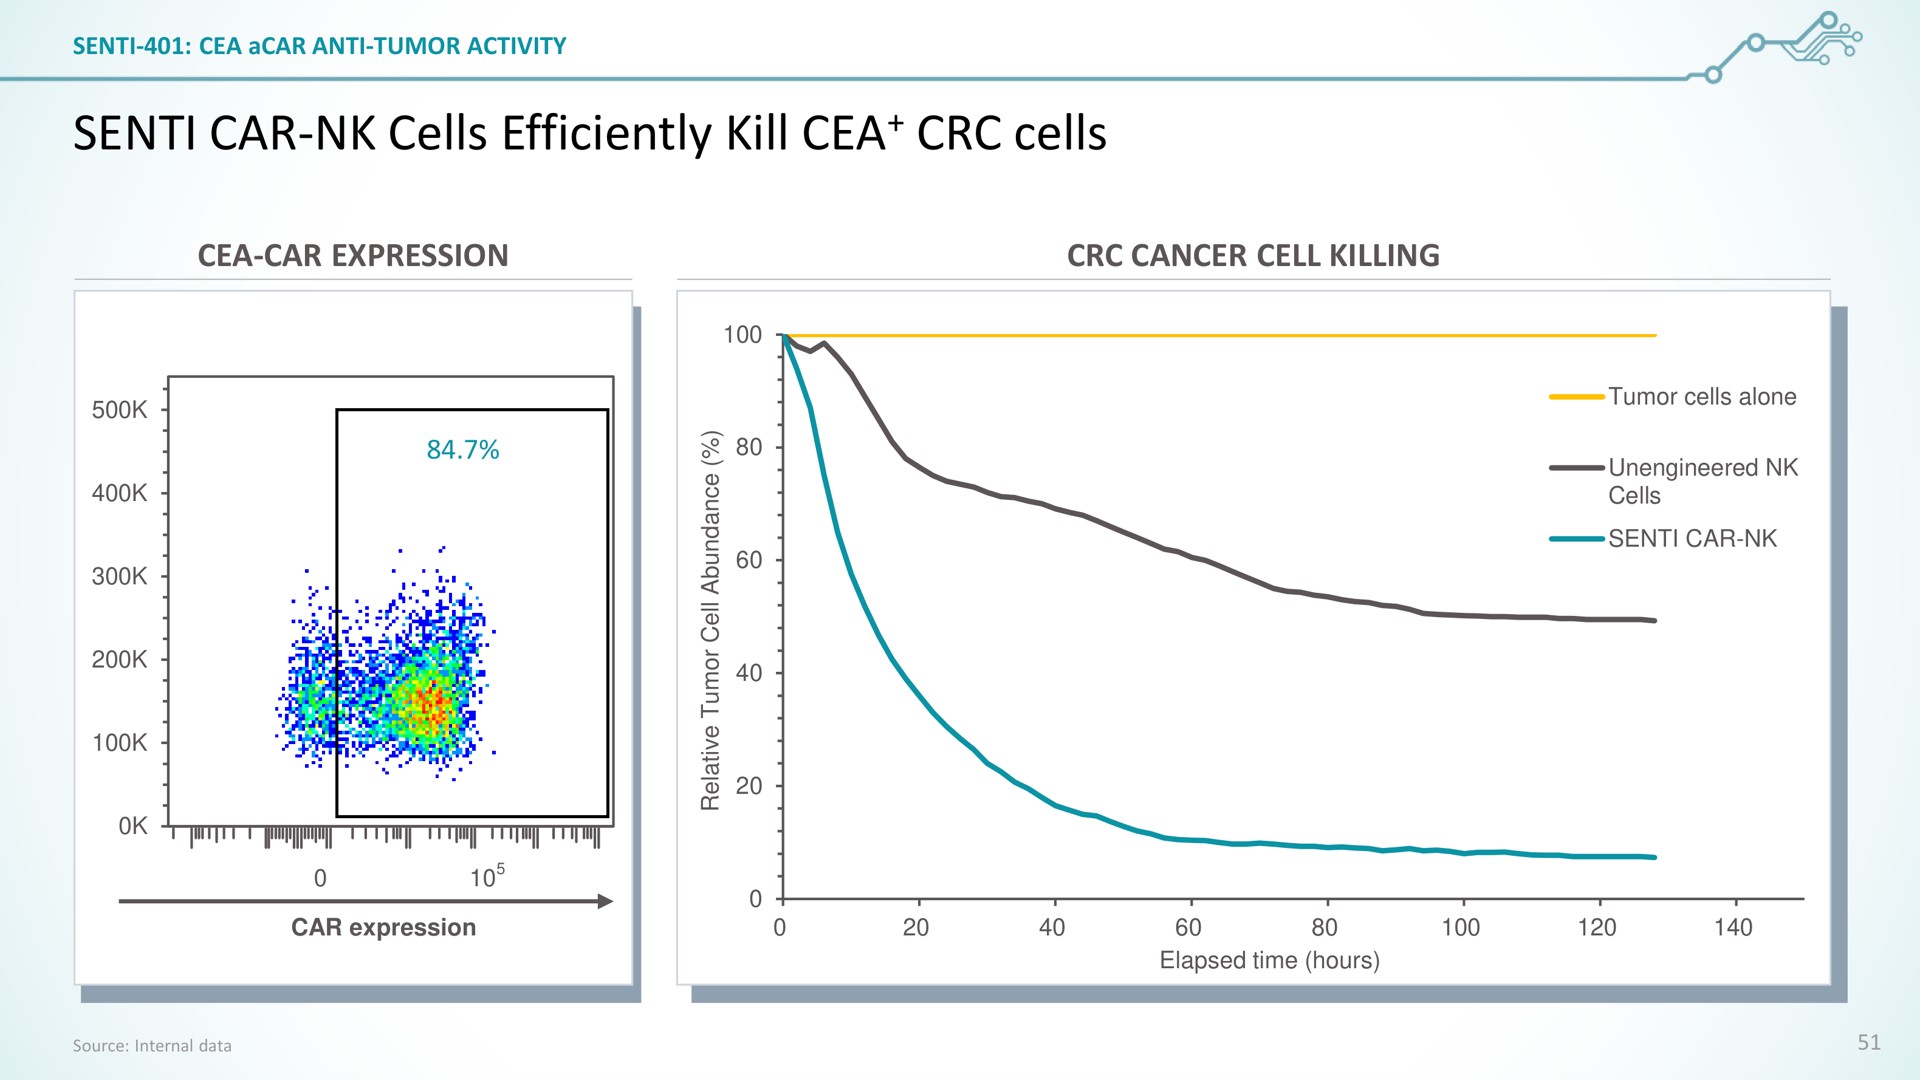 senti car cells efficiently kill cells | SentiBio